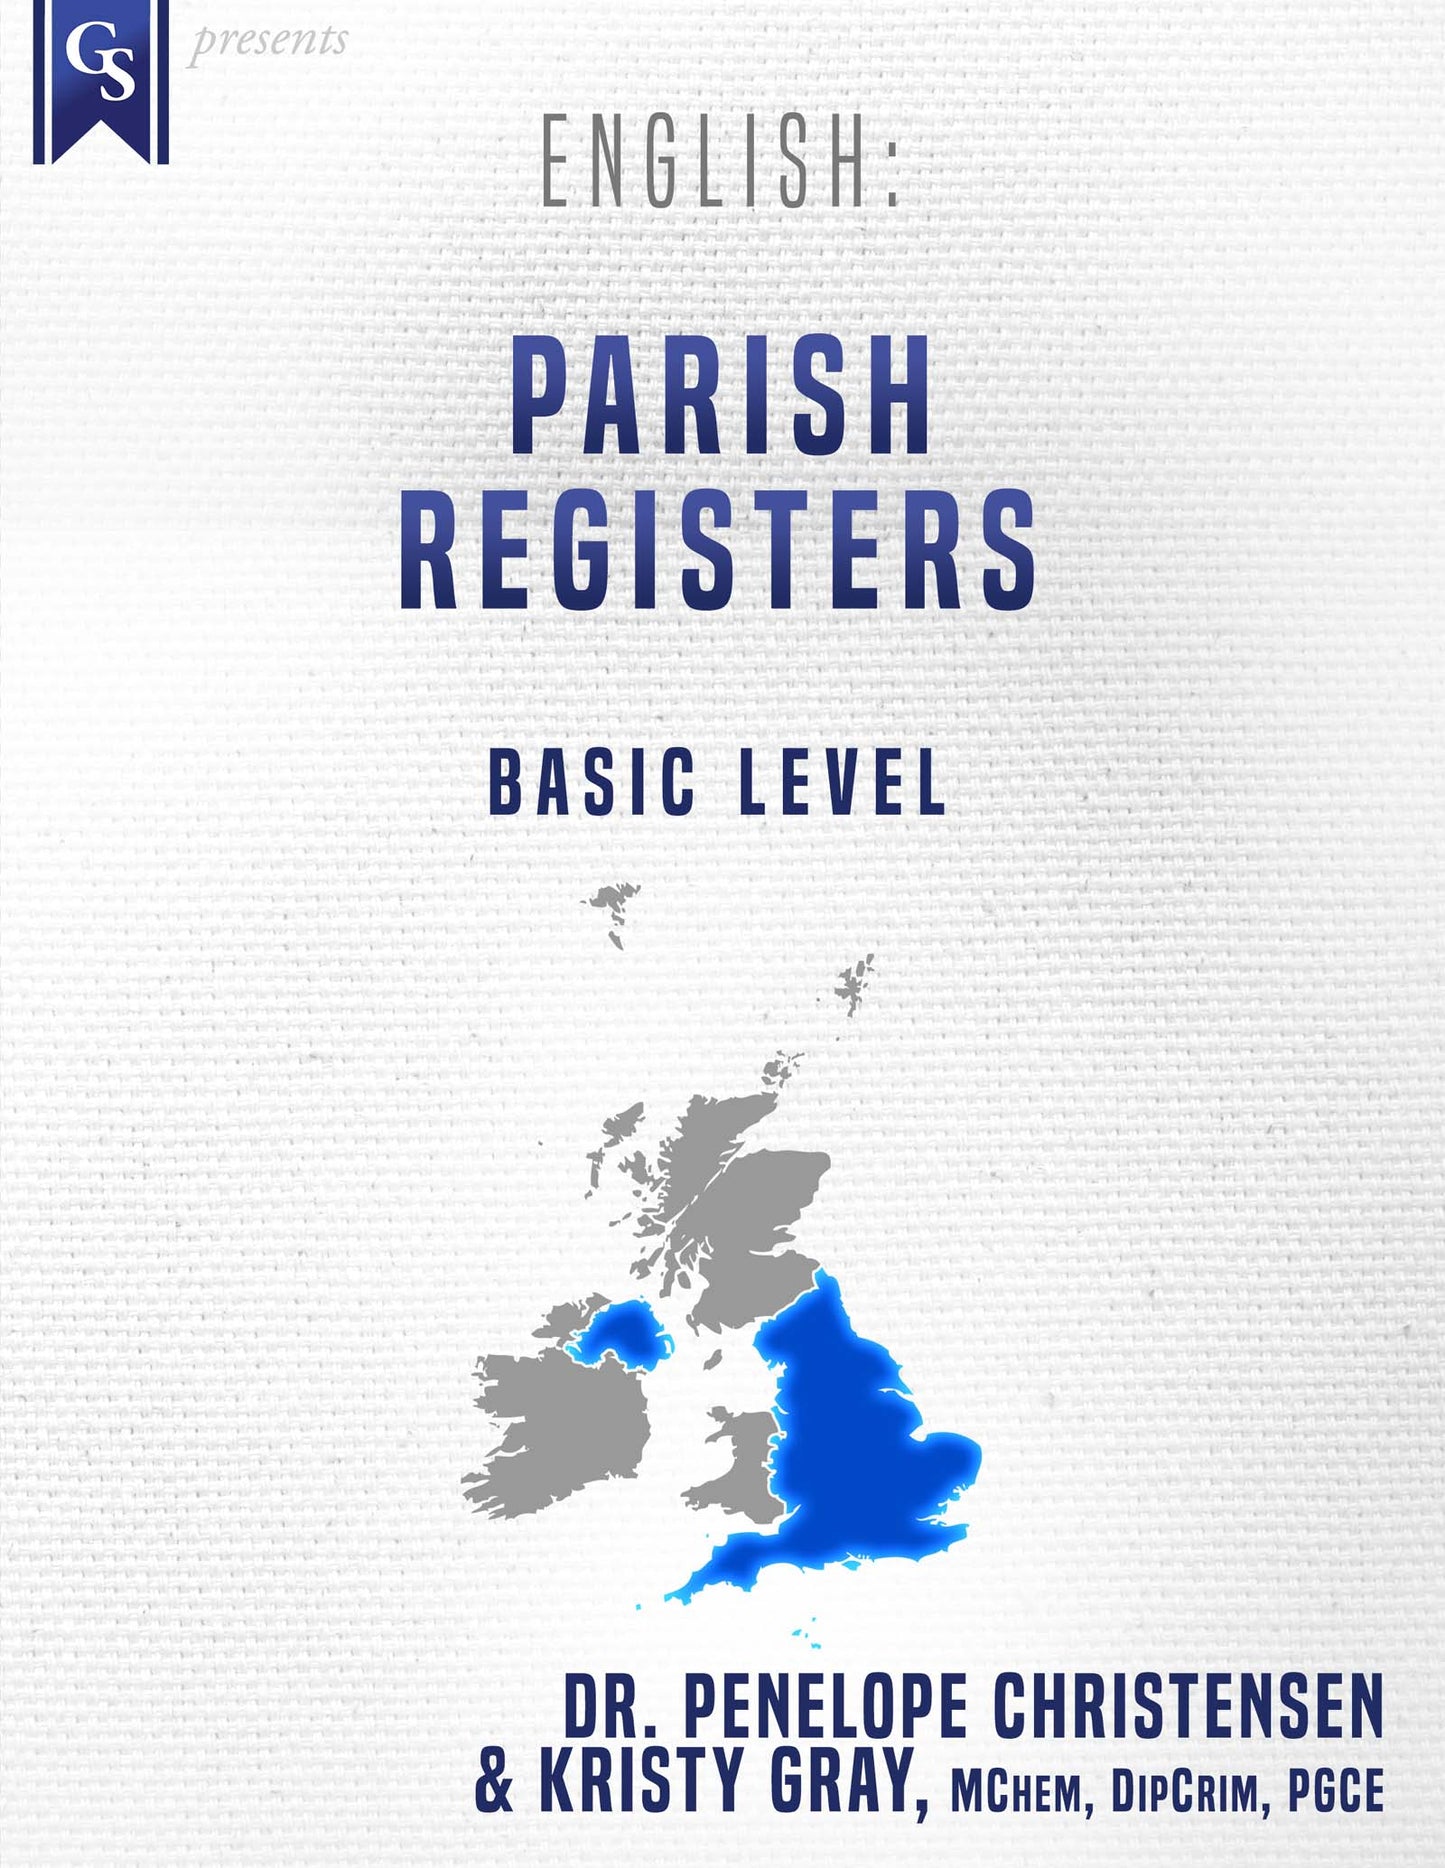 Printed Course Material-English: Parish Registers